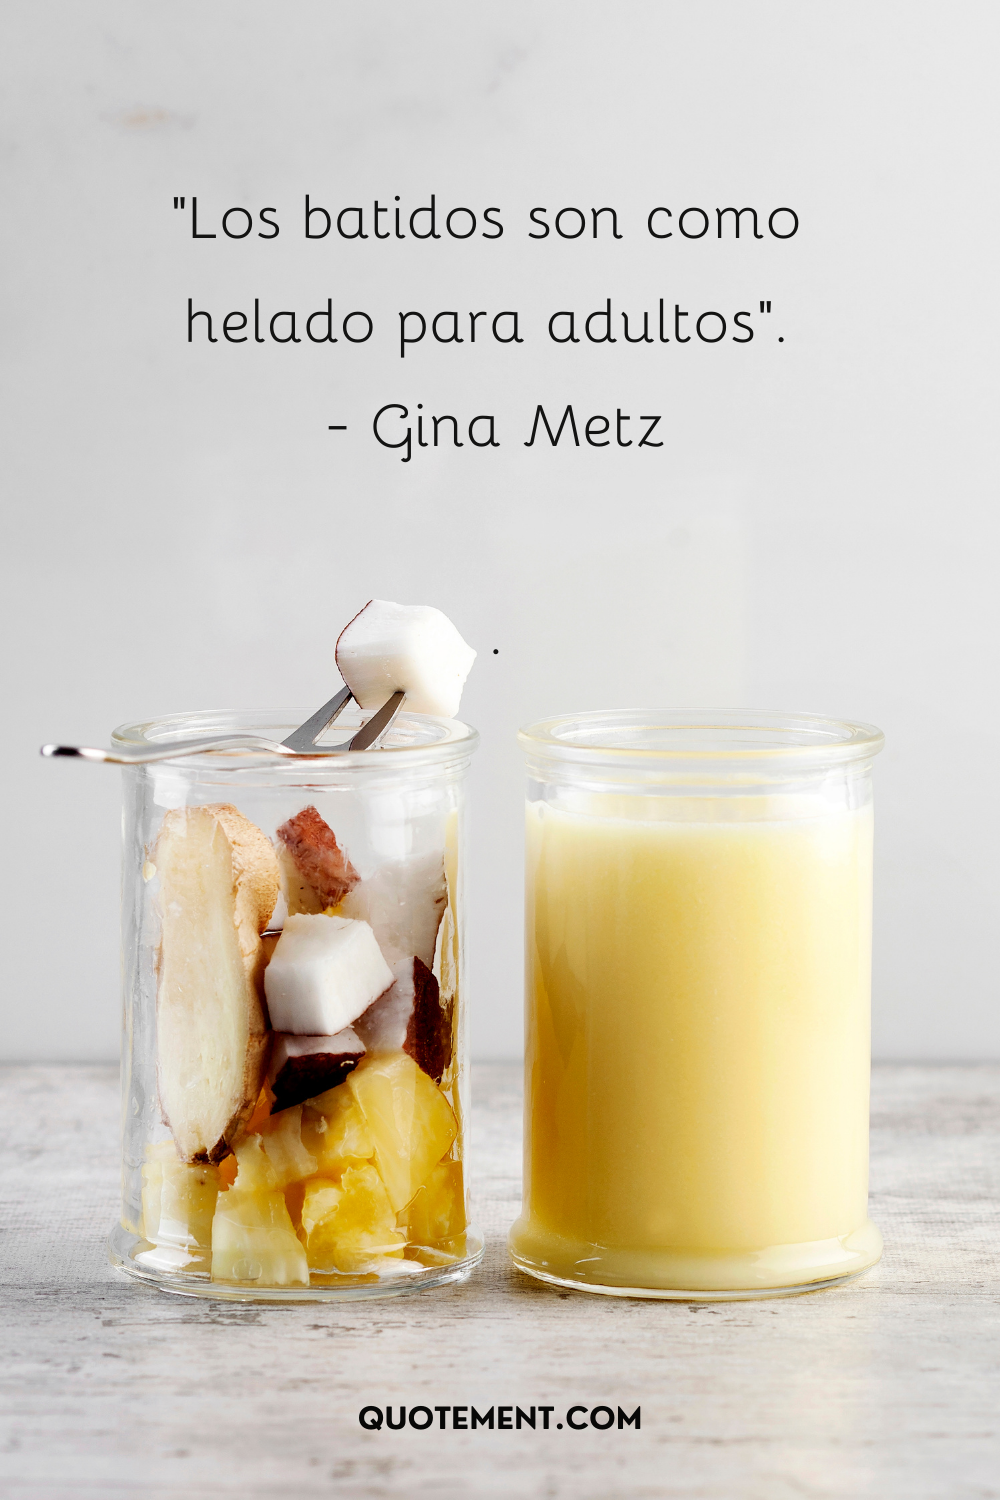 "Los smoothies son como helados para adultos". - Gina Metz